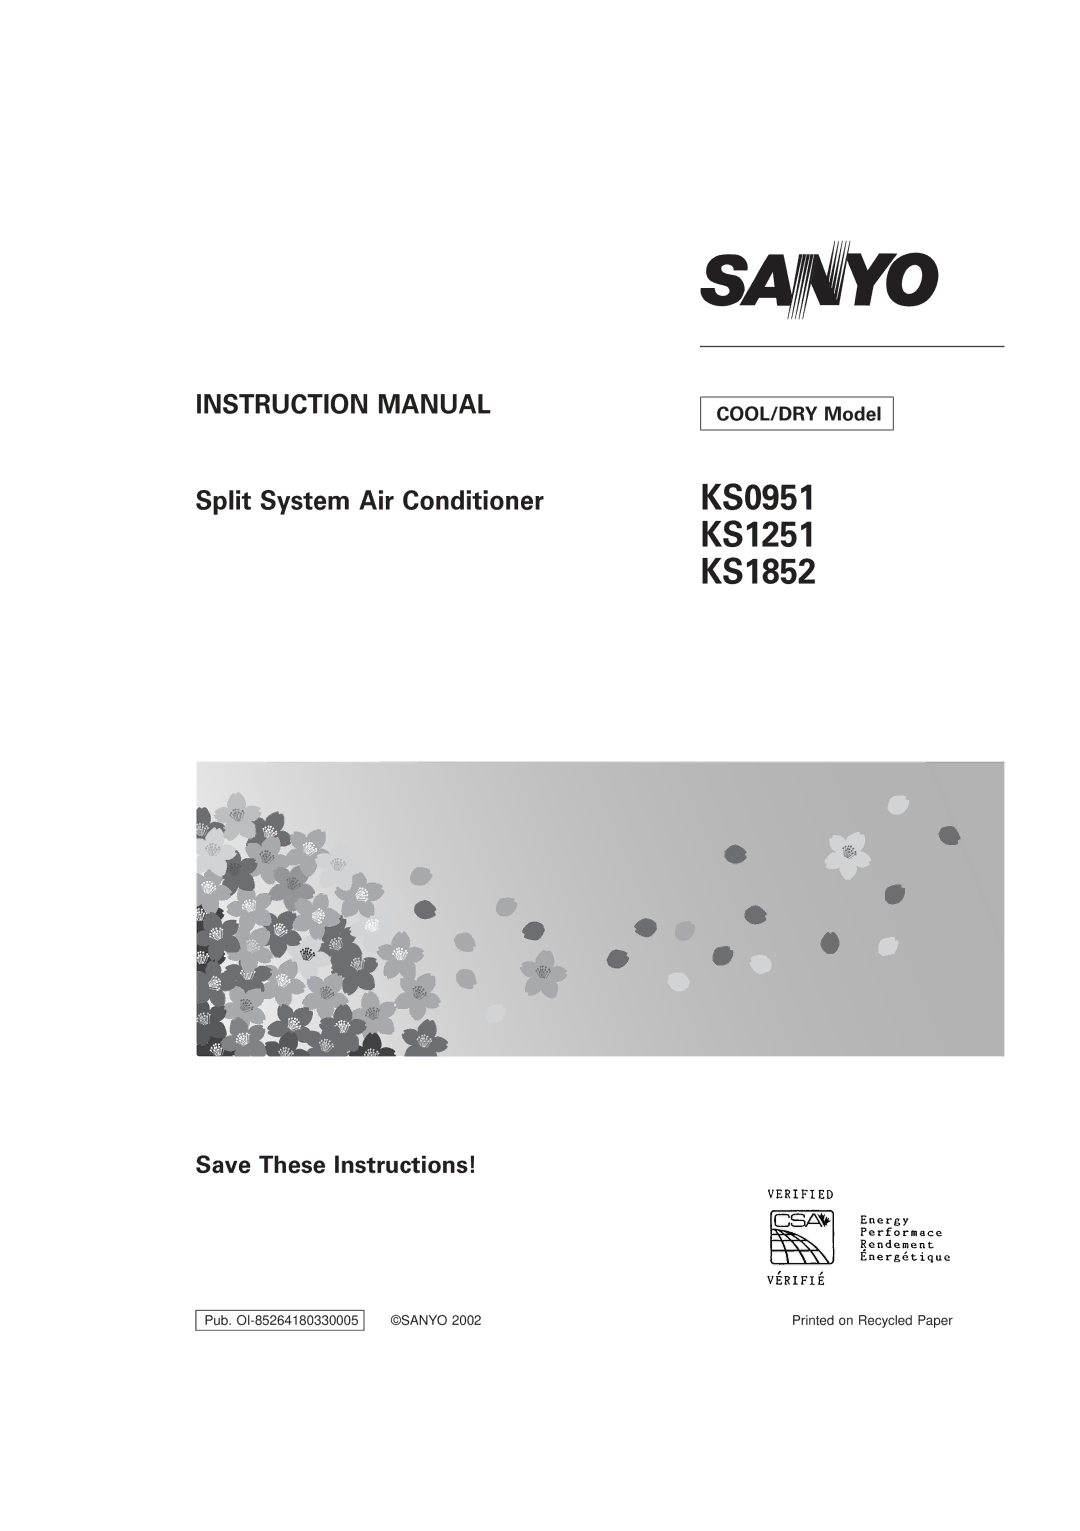 Sanyo instruction manual KS0951 KS1251 KS1852 